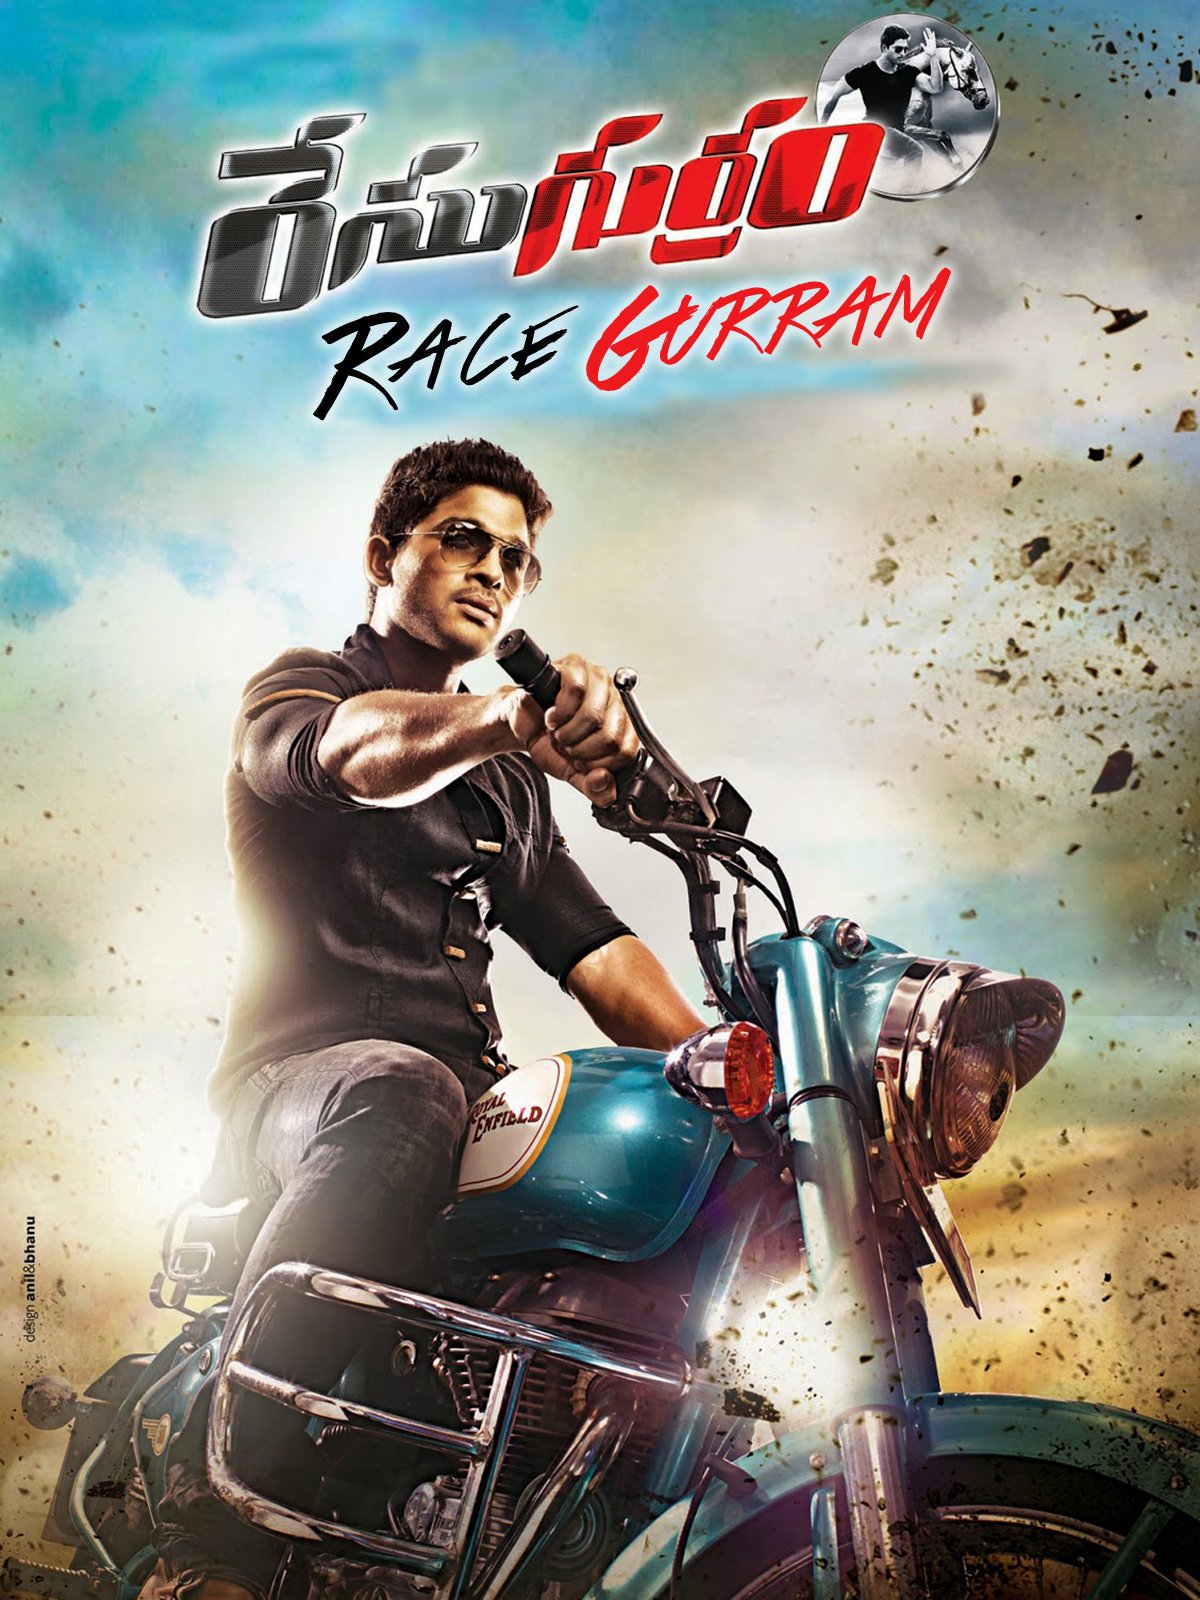 Race gurram full movie free download in telugu movie